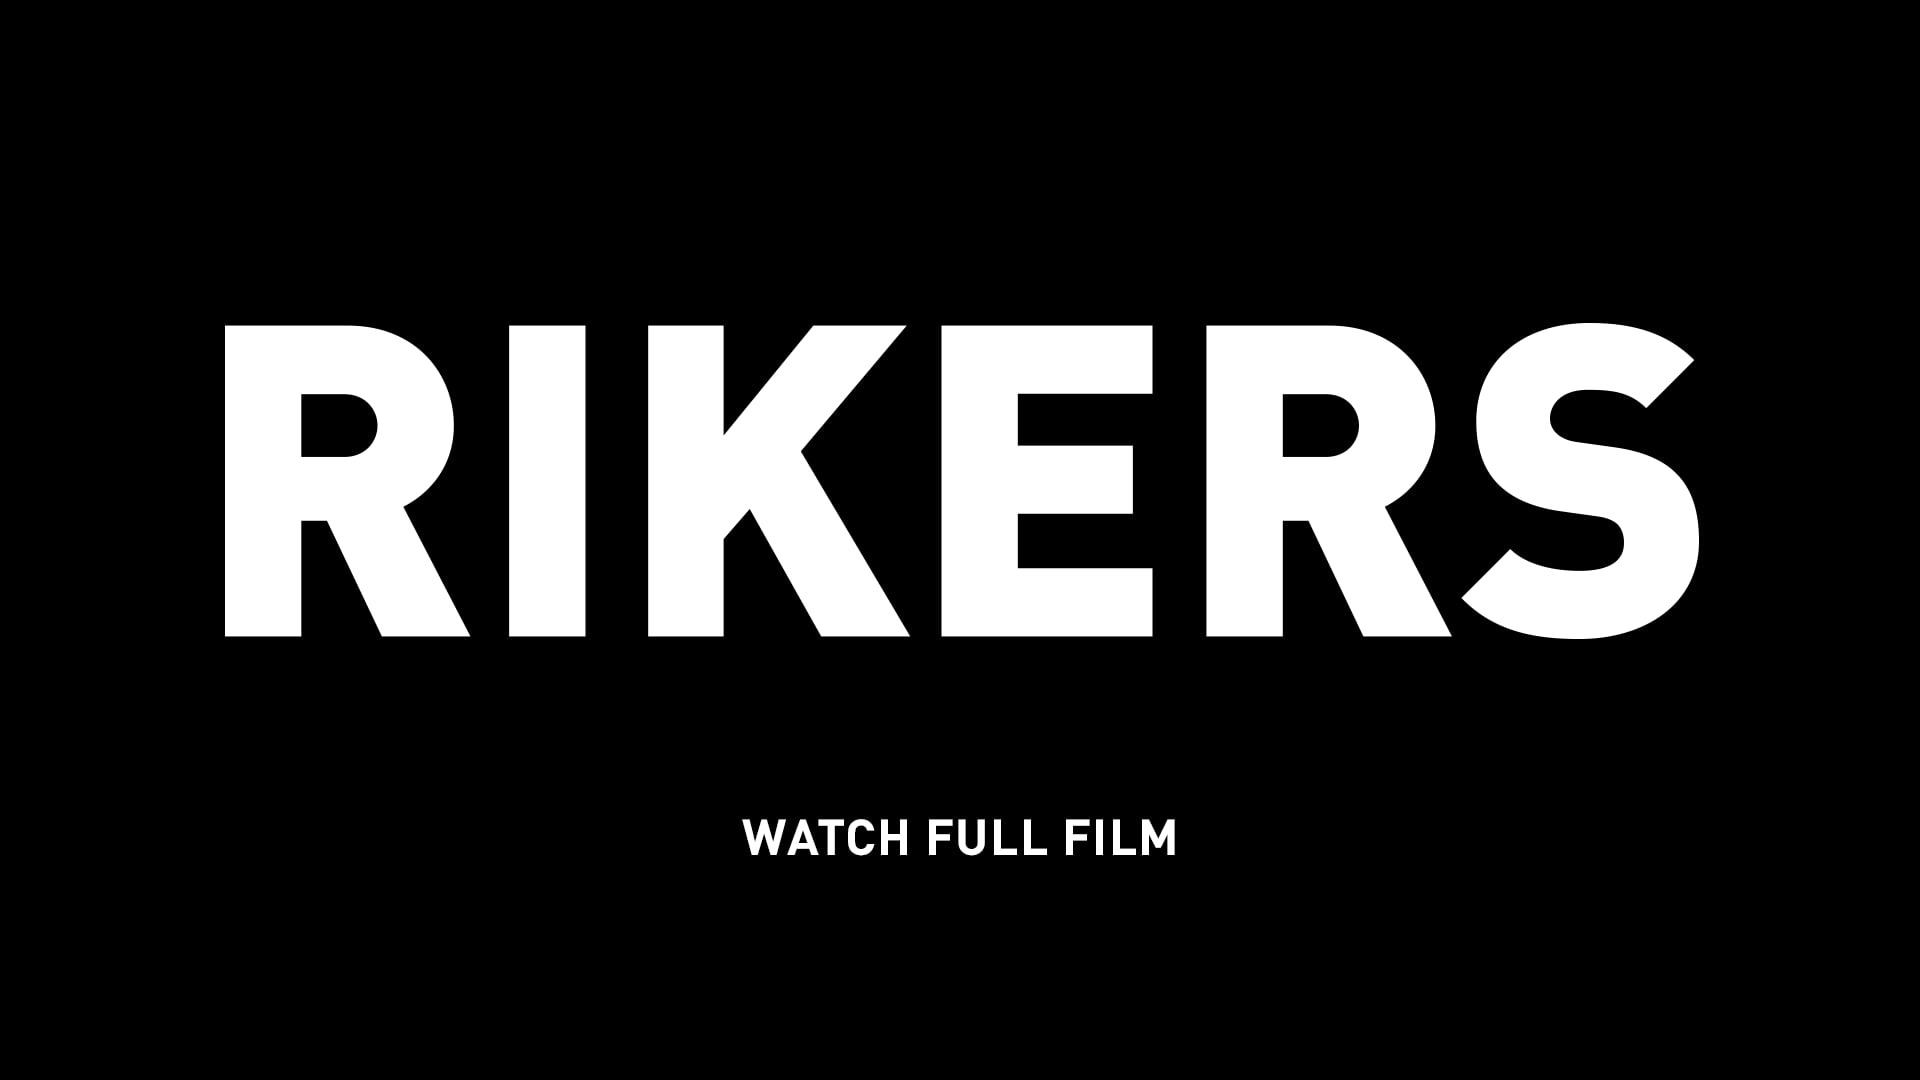 RIKERS - Thirteen/WNET Broadcast on Vimeo